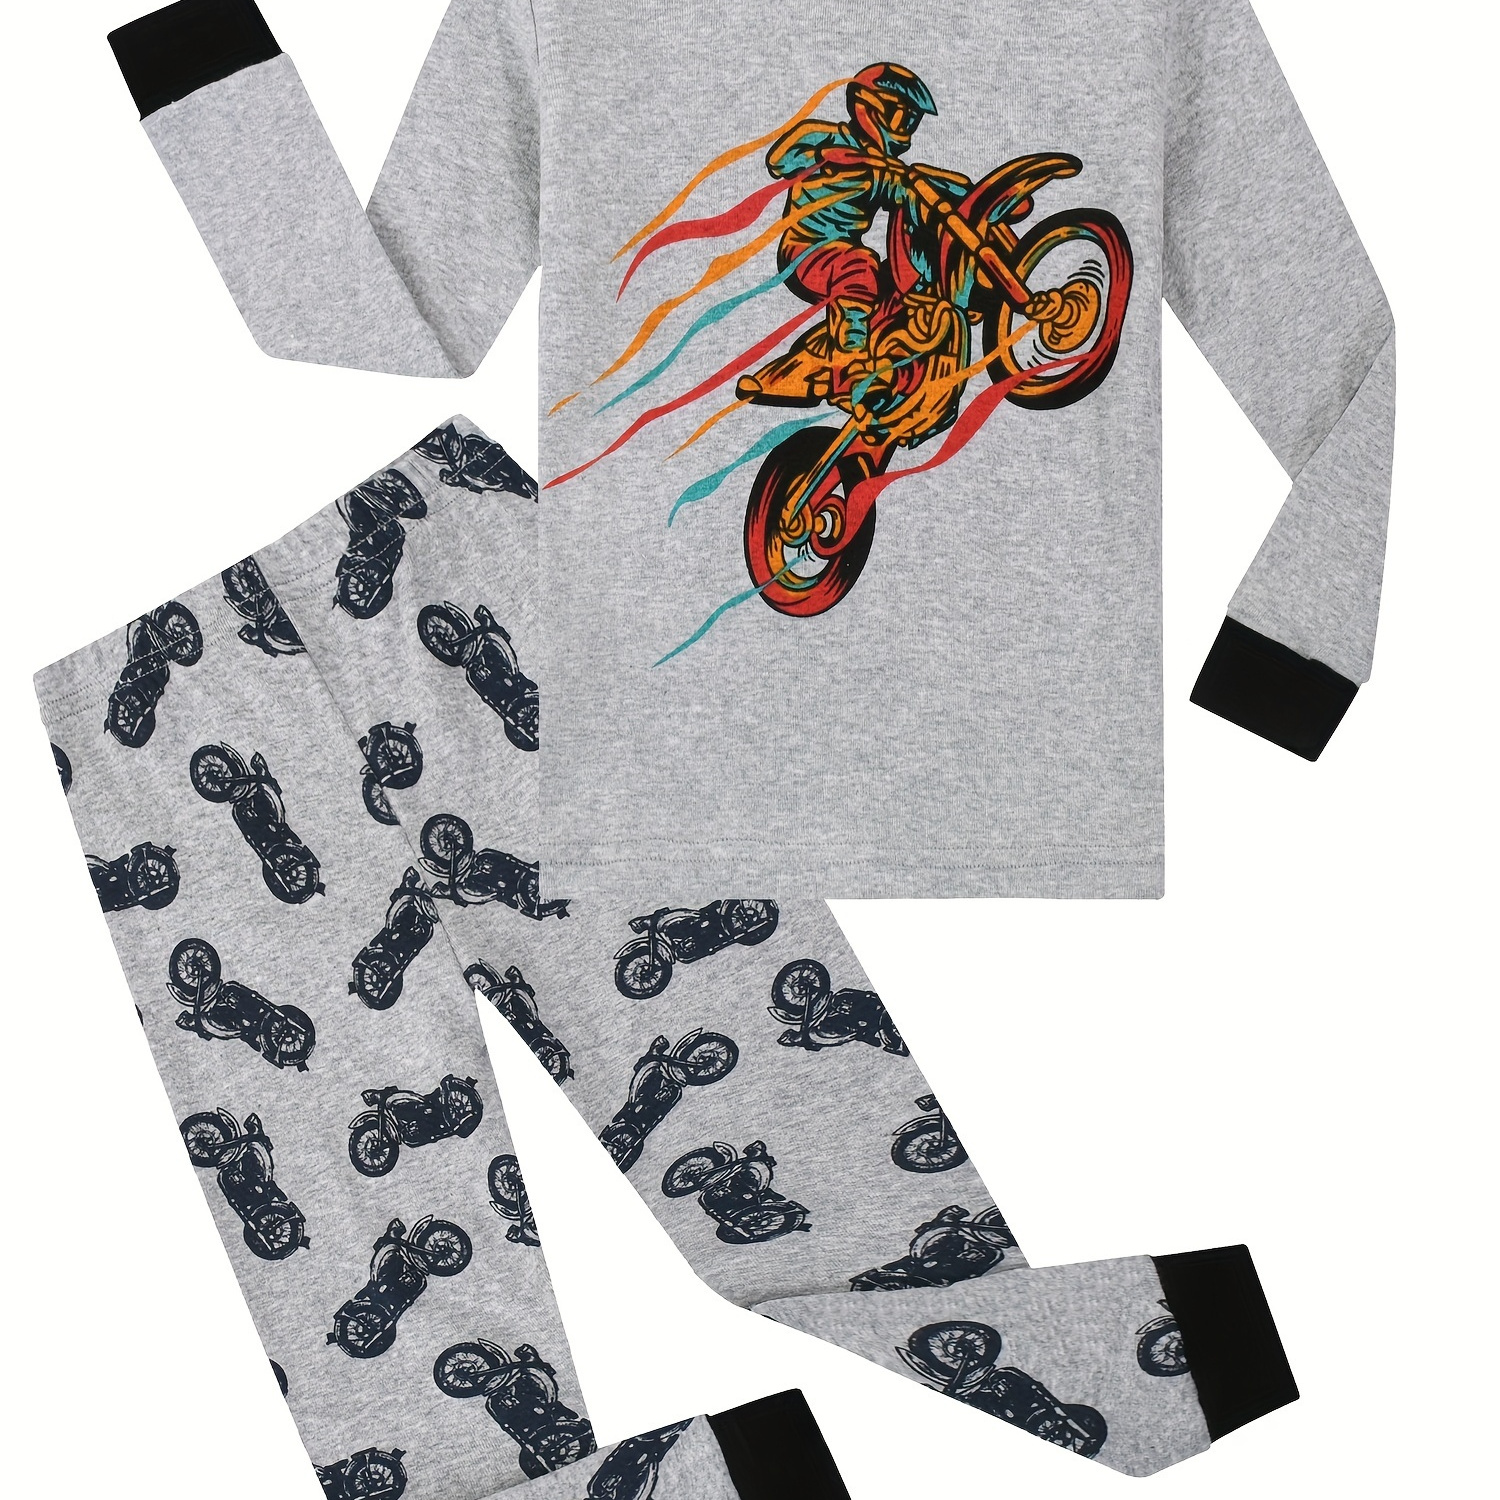 

Boys 2pcs Homewear Long Sleeve Round Neck T-shirt Top & Elastic Waist Pants Motorcyclists Print Cotton Comfortable Casual Pajamas Set Kids Clothes